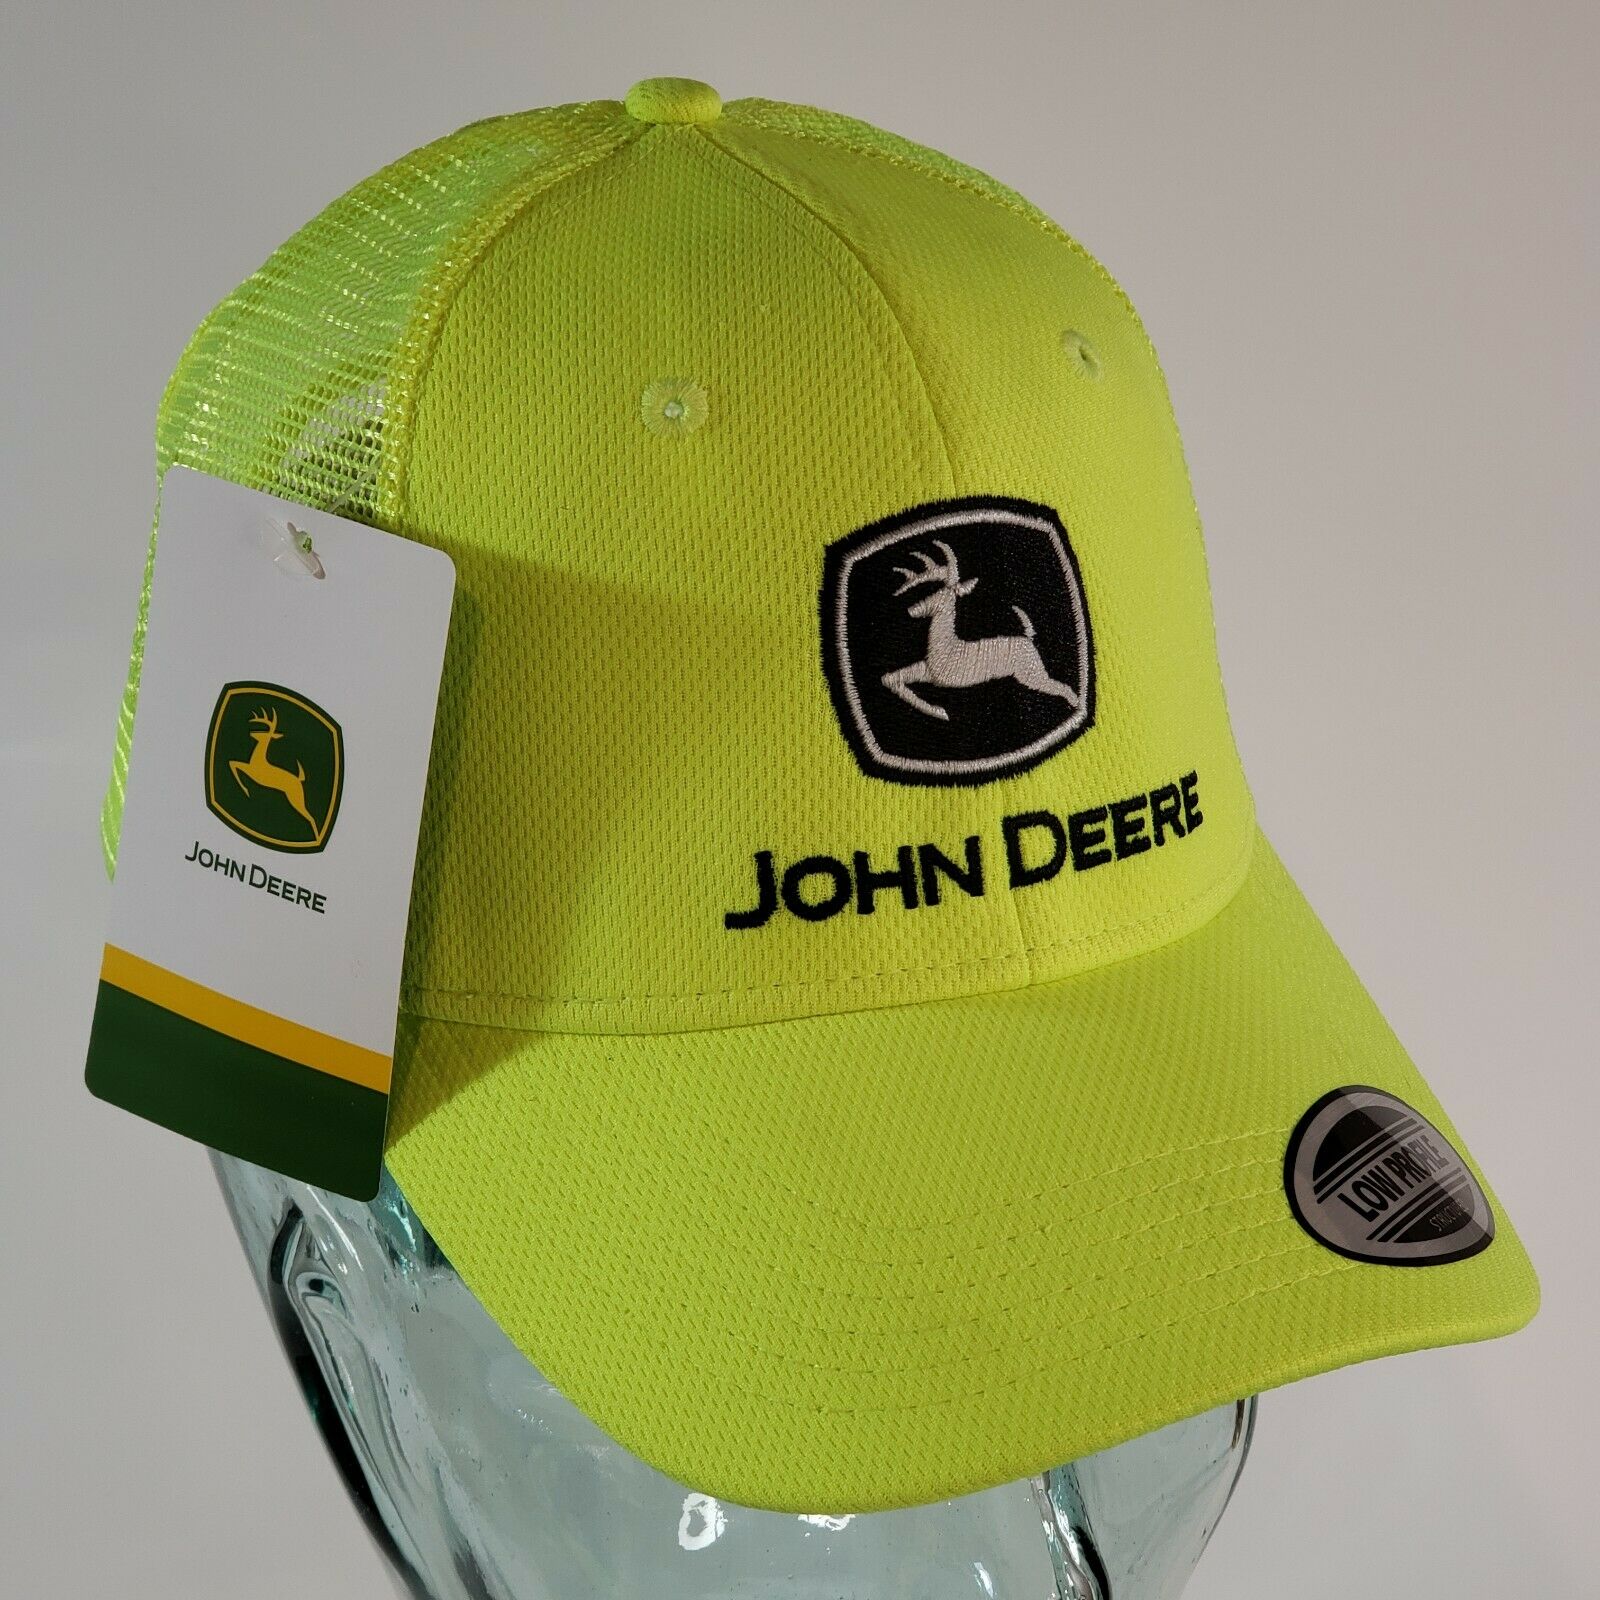 New John Deere Yellow High Visibility Polyester Twill Mesh Cap Lp70688